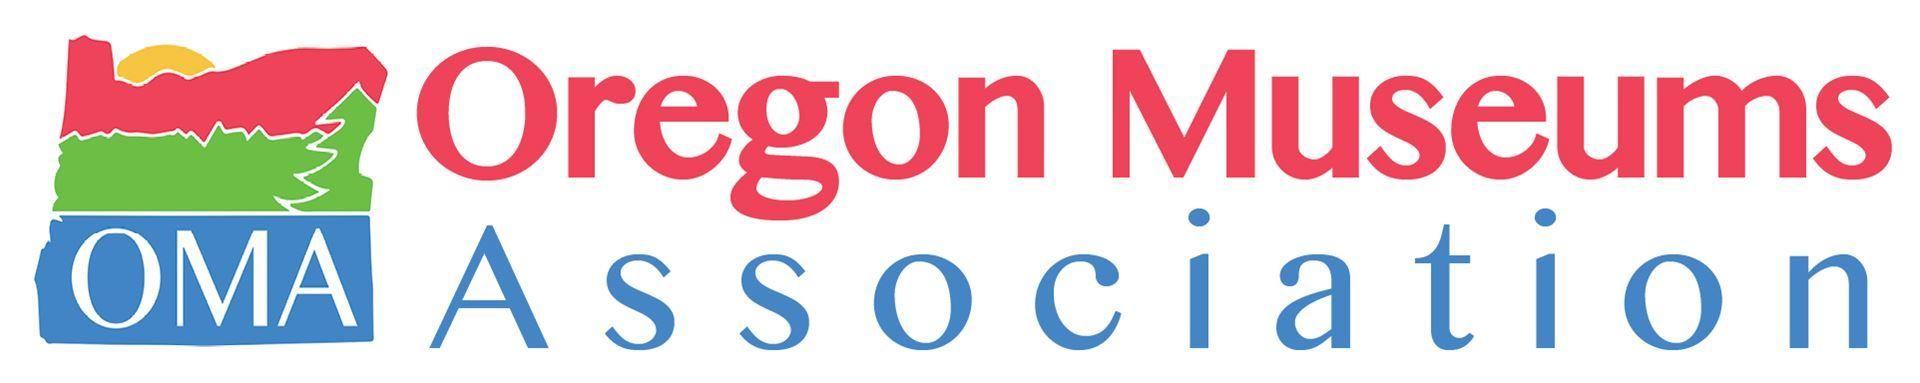 Oma Logo - Oregon Museums Association